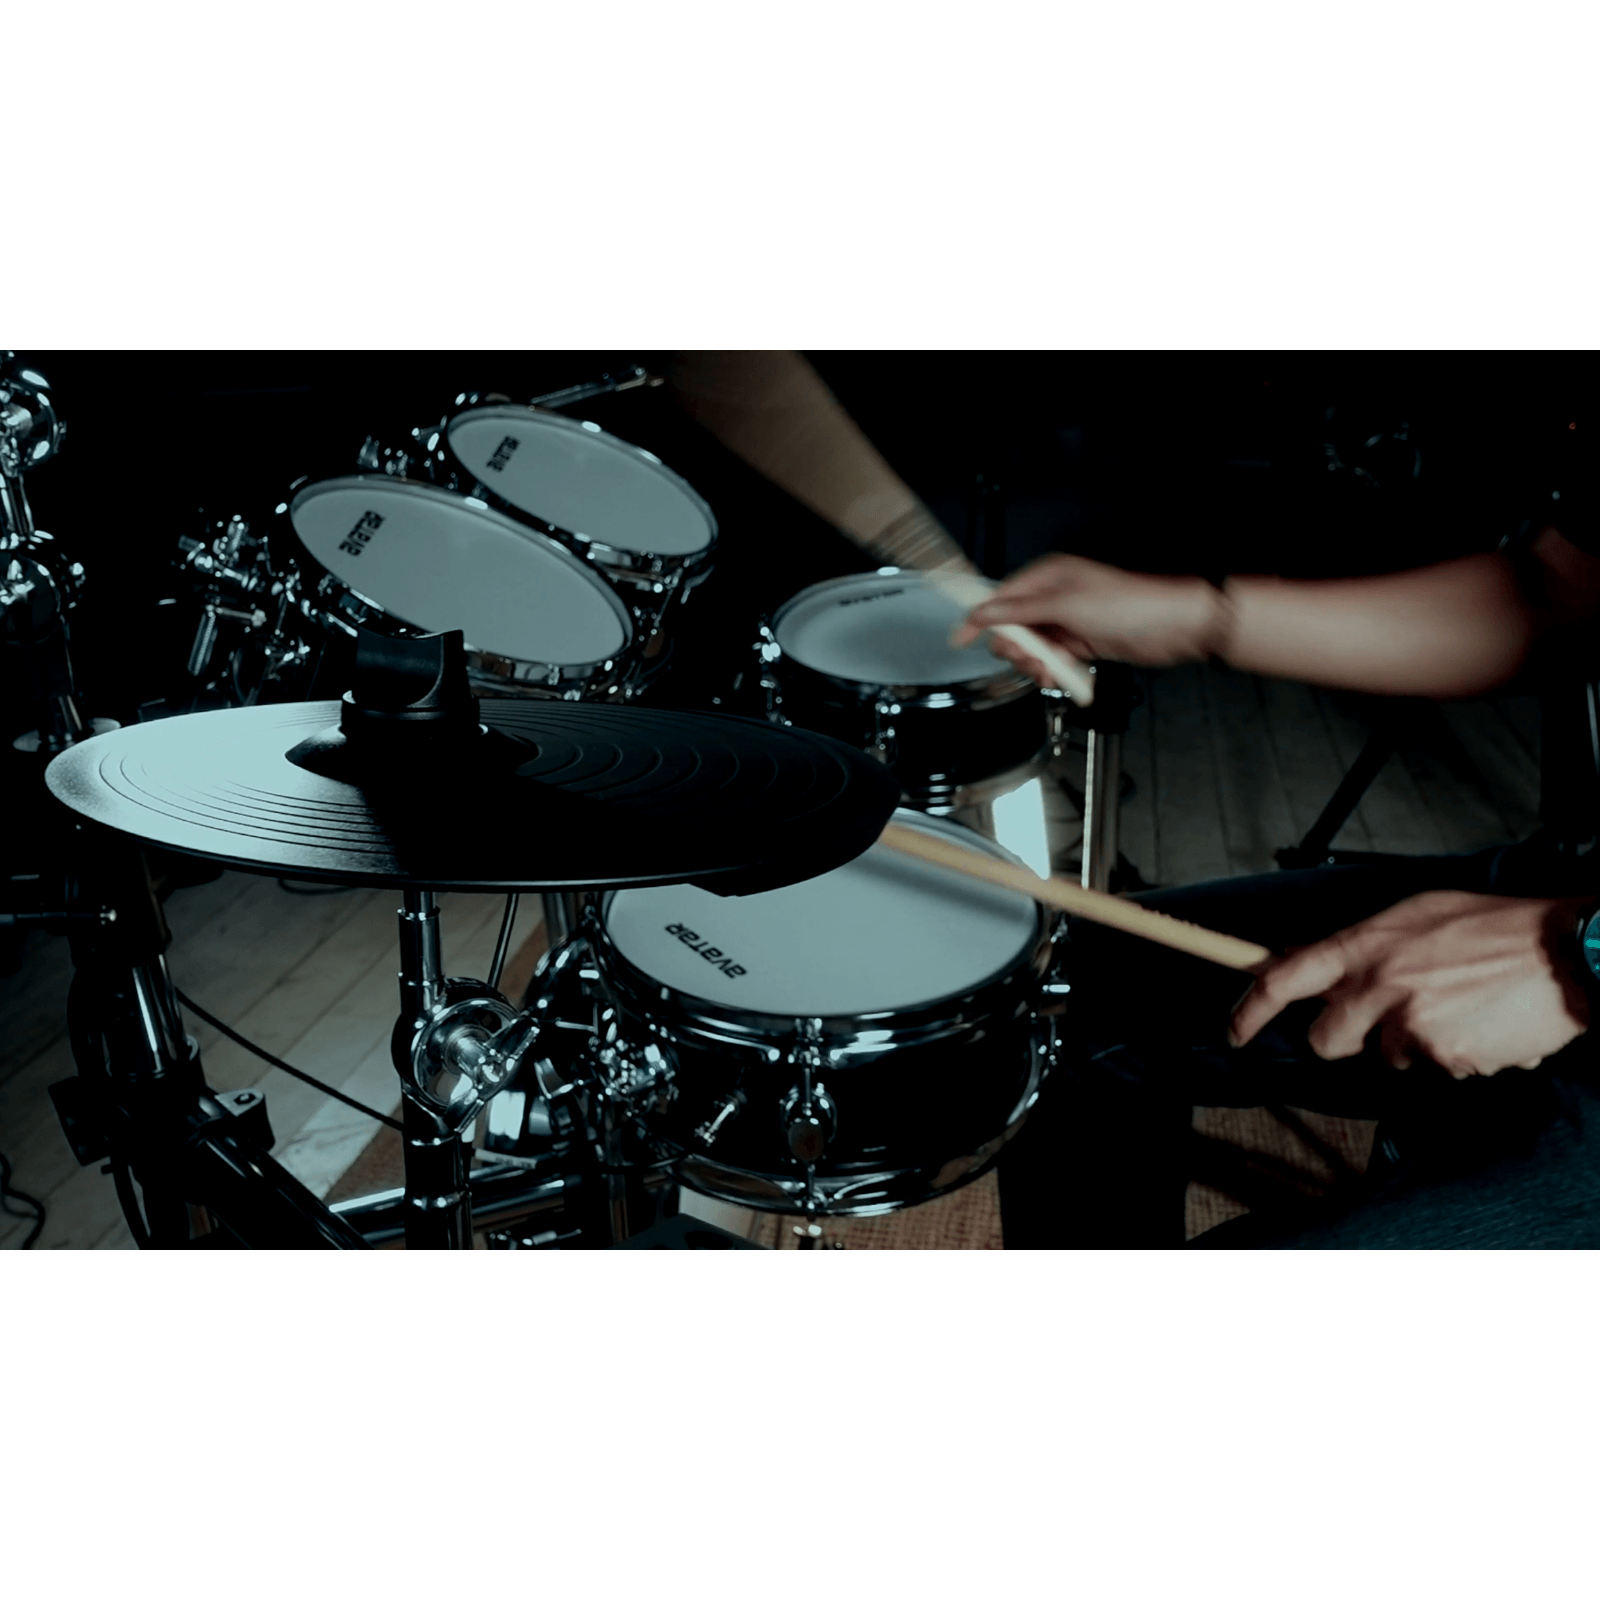 Avatar SD301-1S Digital Drumkit Set | AVATAR , Zoso Music